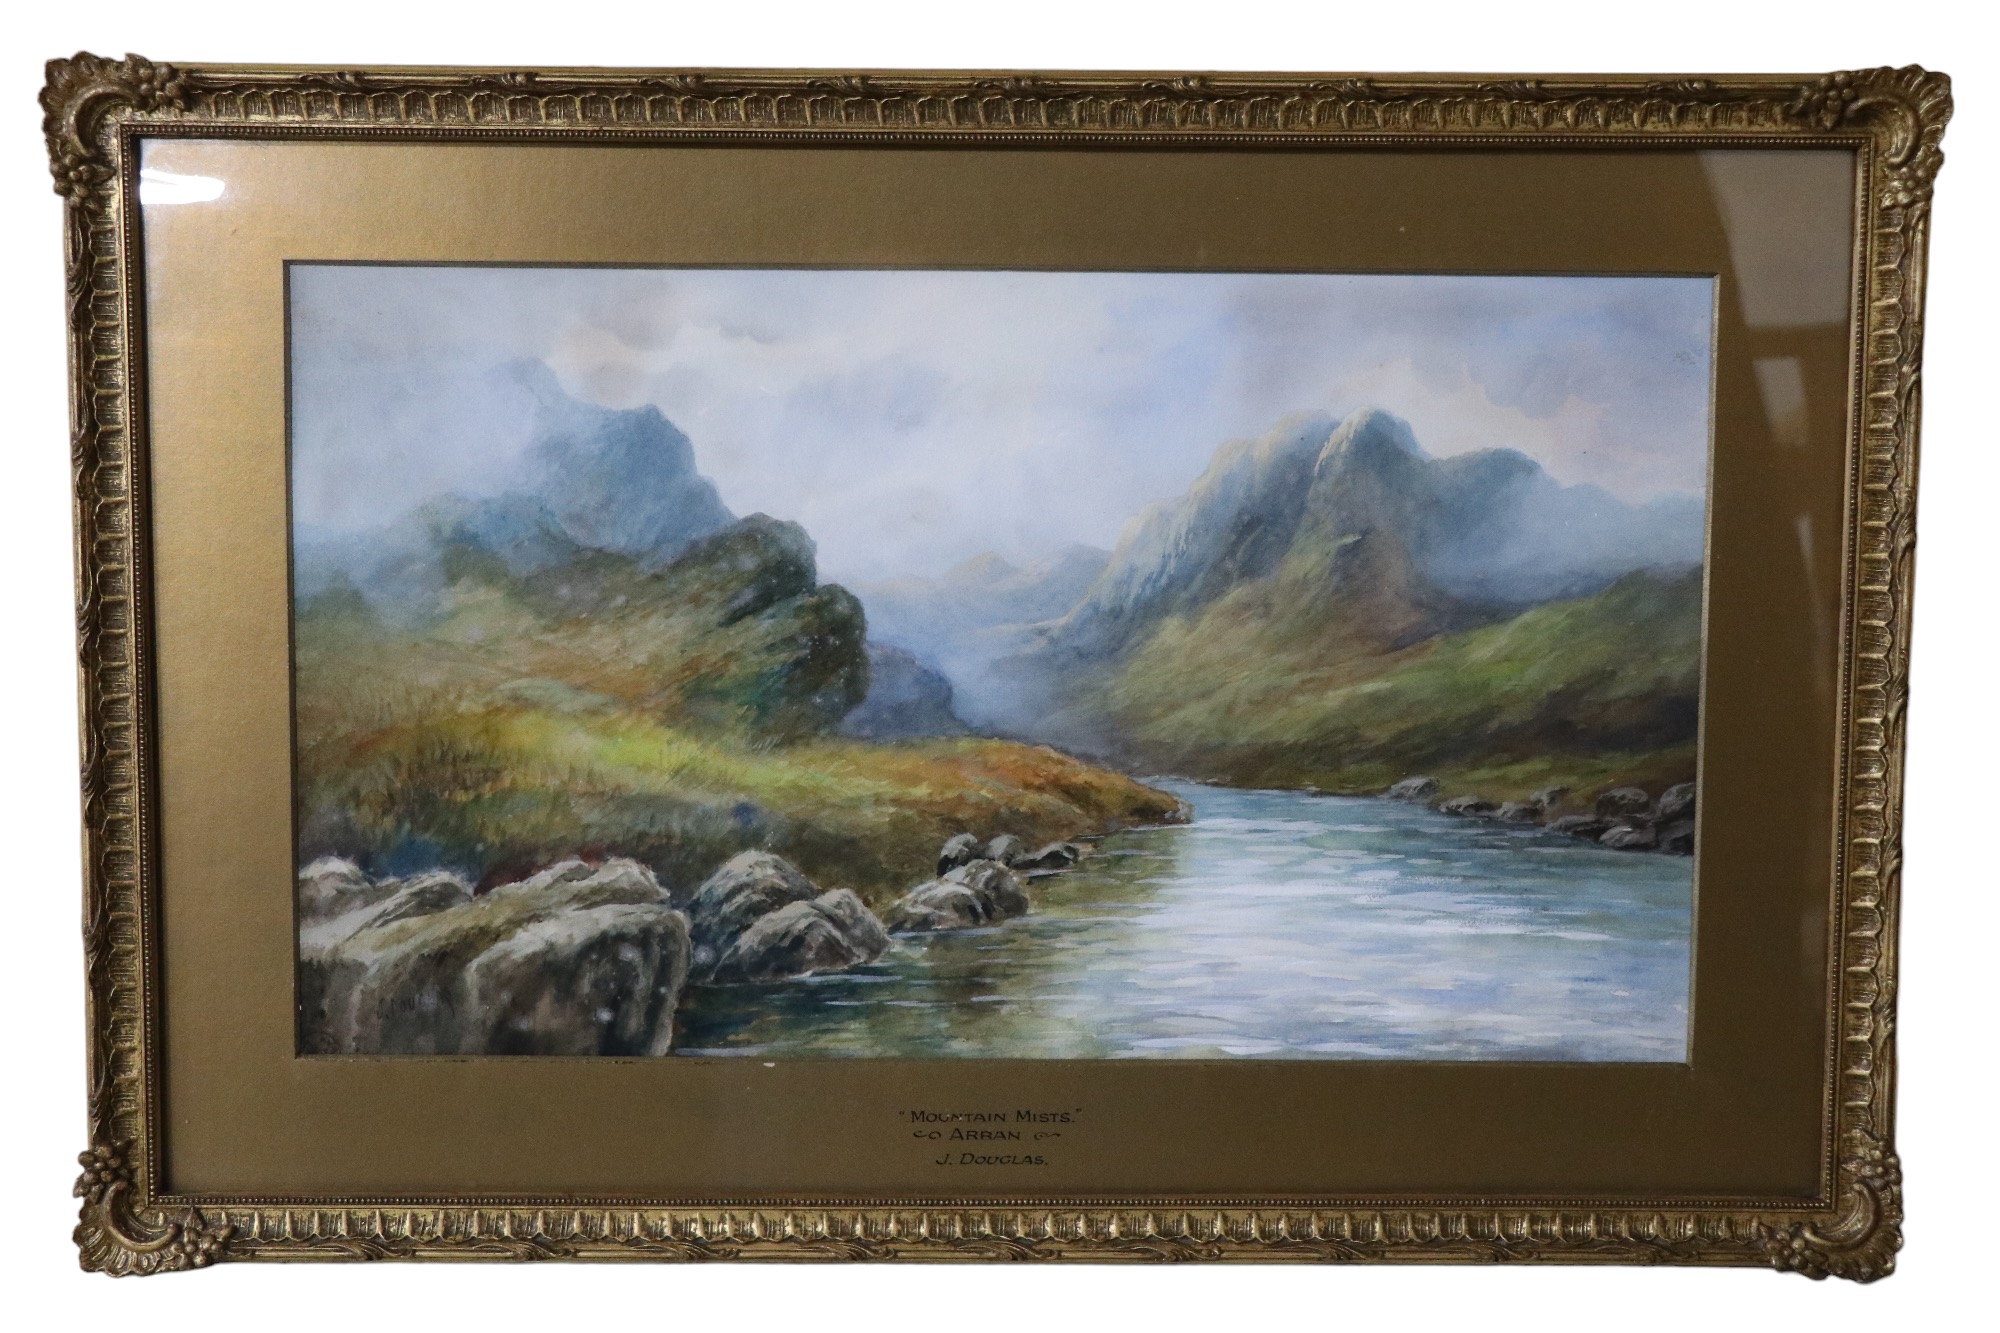 James Douglas (Scottish, 1858-1911) "Mountain Mists. Arran", an atmospheric study of a river